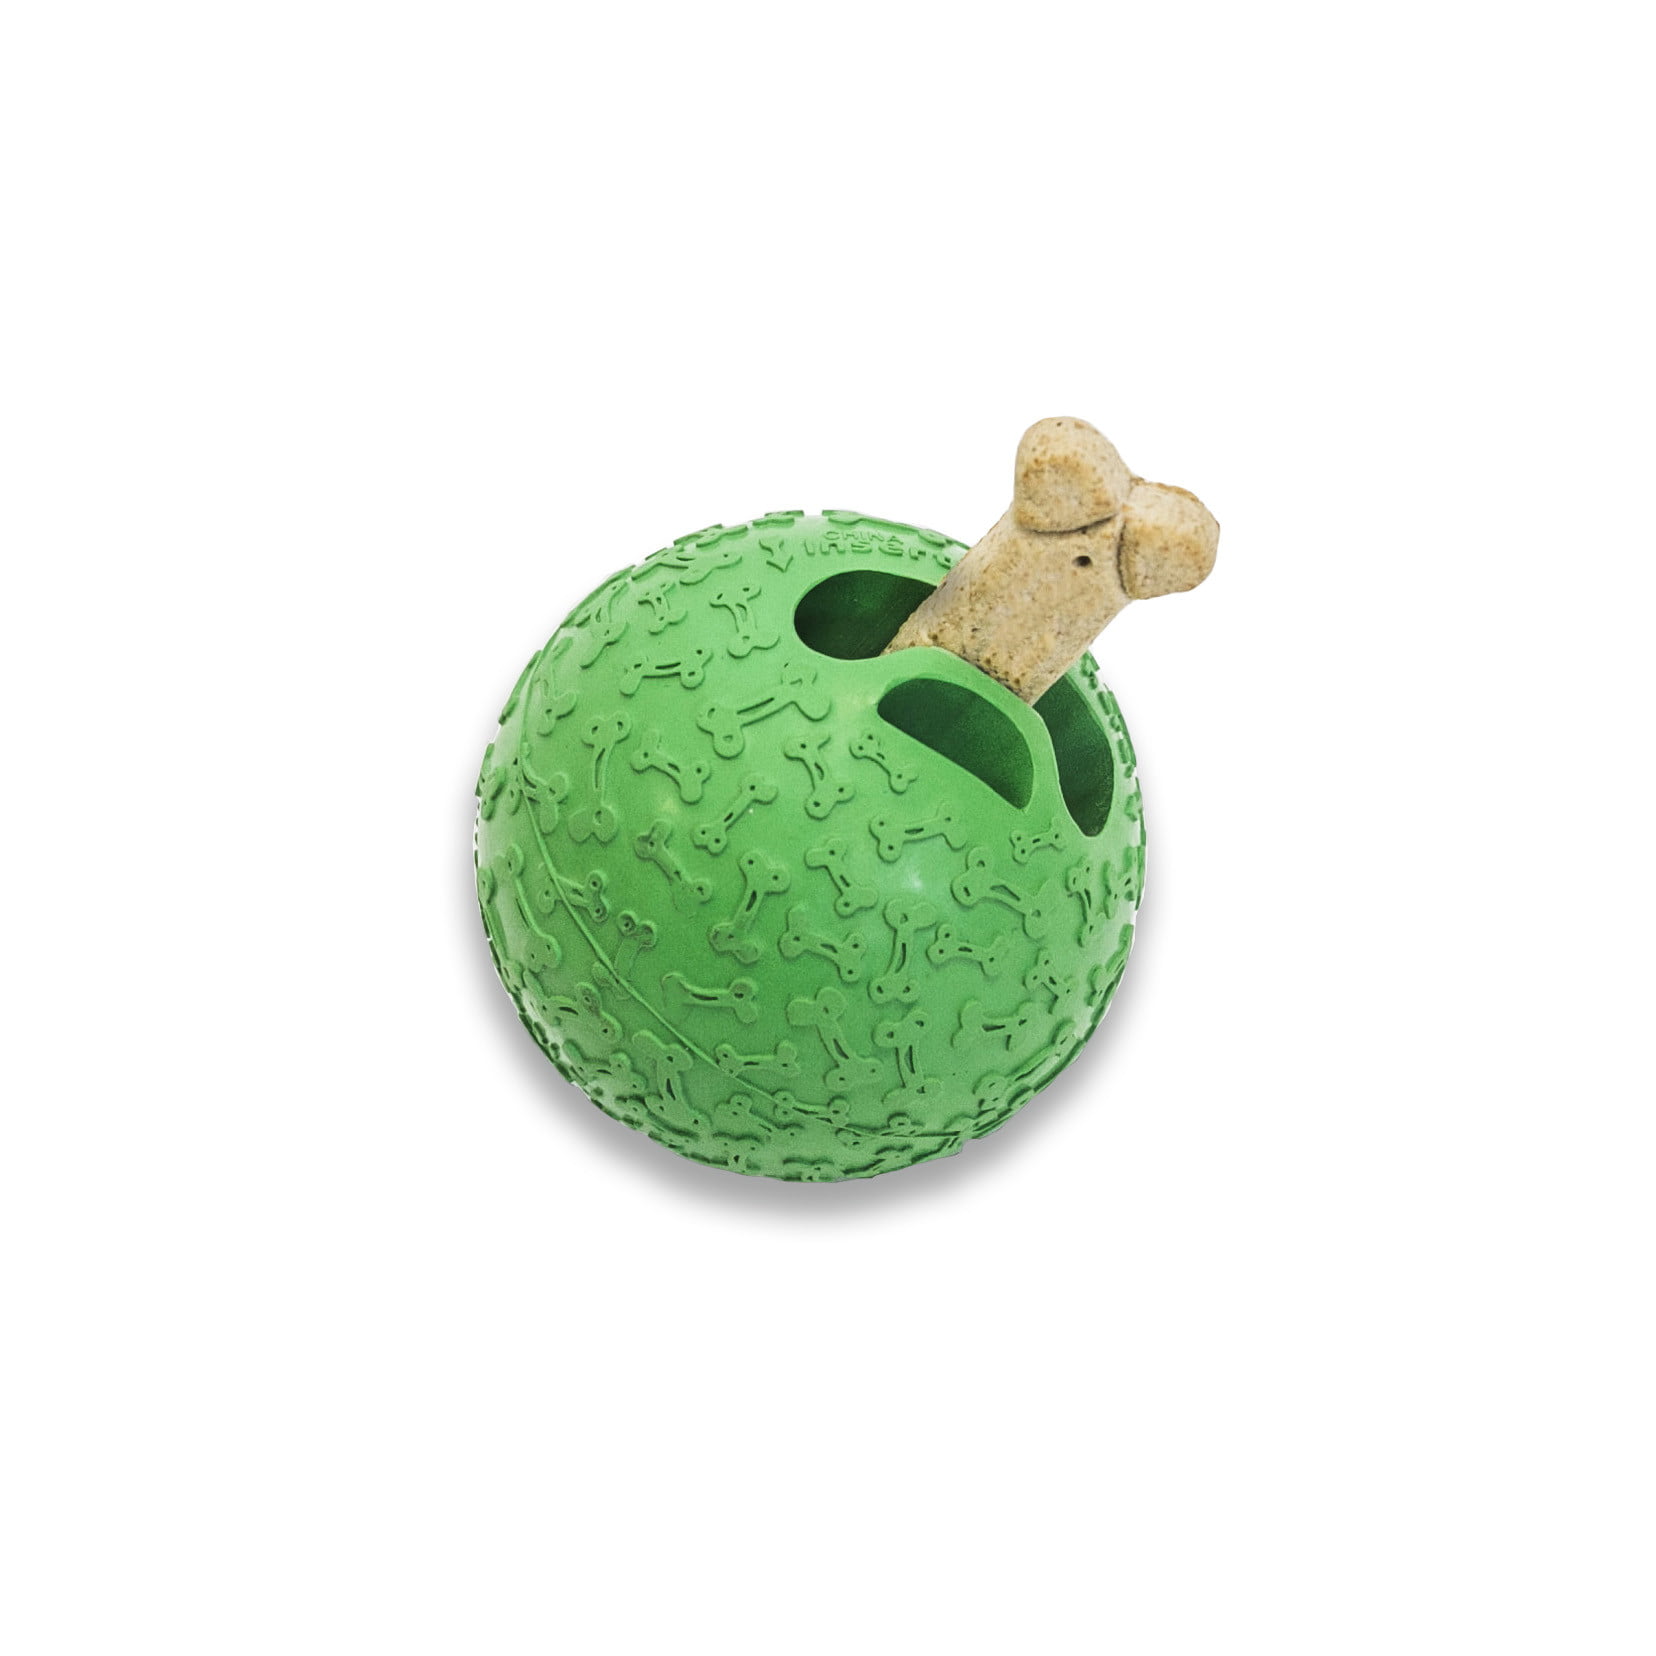 atogafigo dog balls 5.6 inch treat dispensing dog toys for